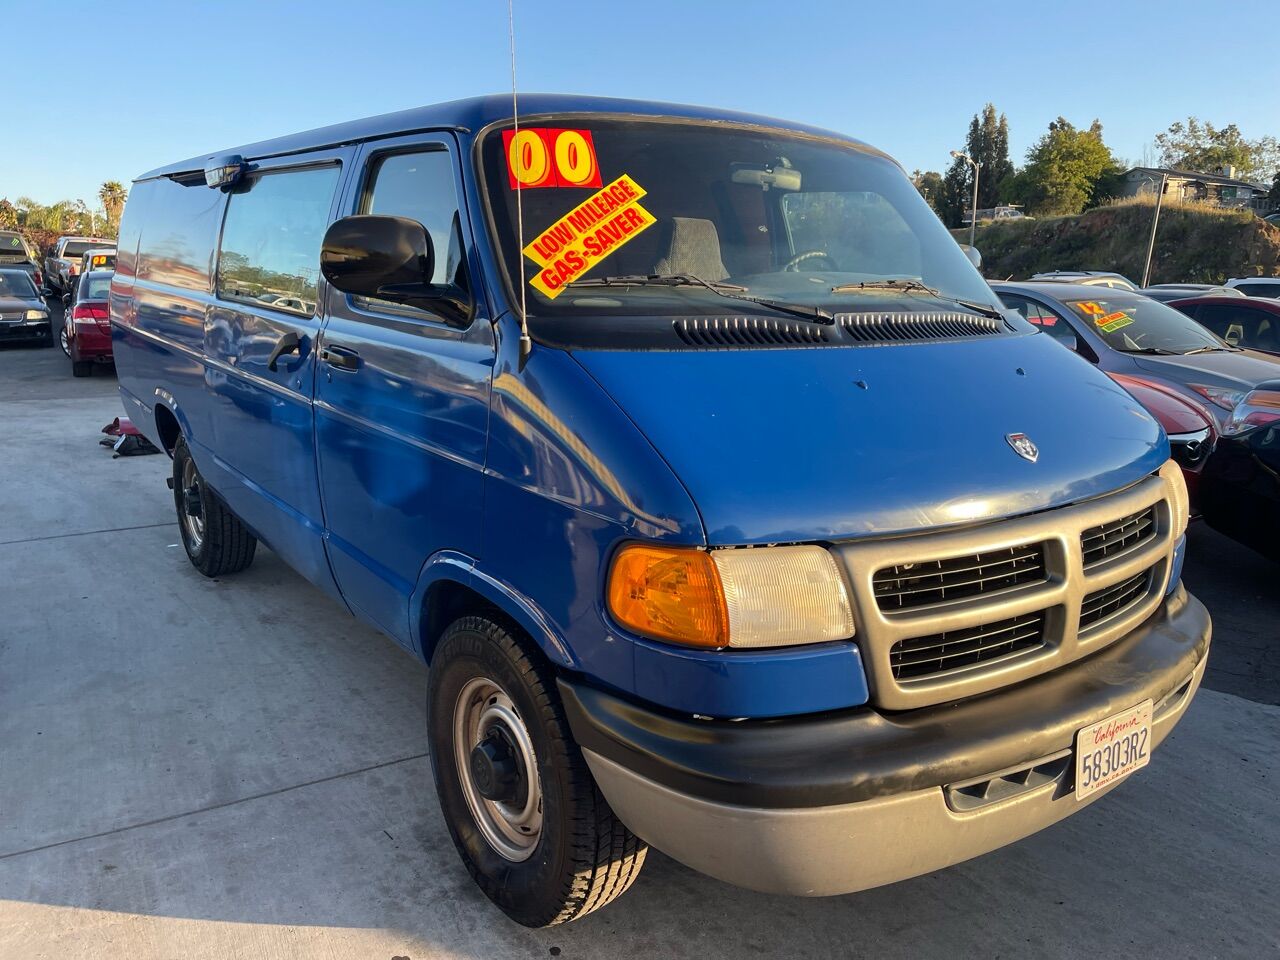 2000 Dodge Ram Van For Sale In San Diego, CA - Carsforsale.com®